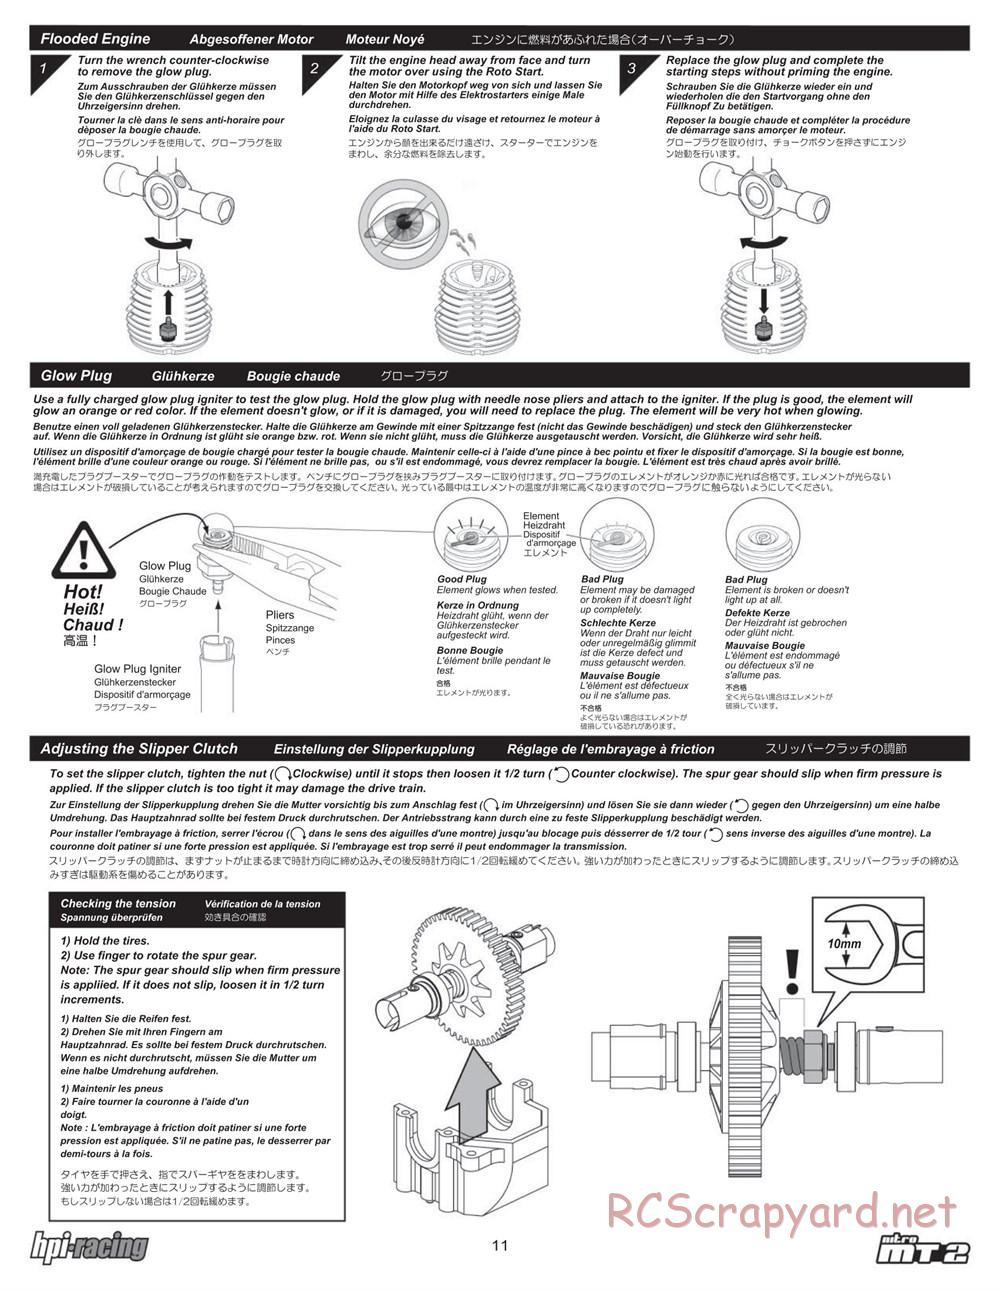 HPI - Nitro MT2 - Manual - Page 11